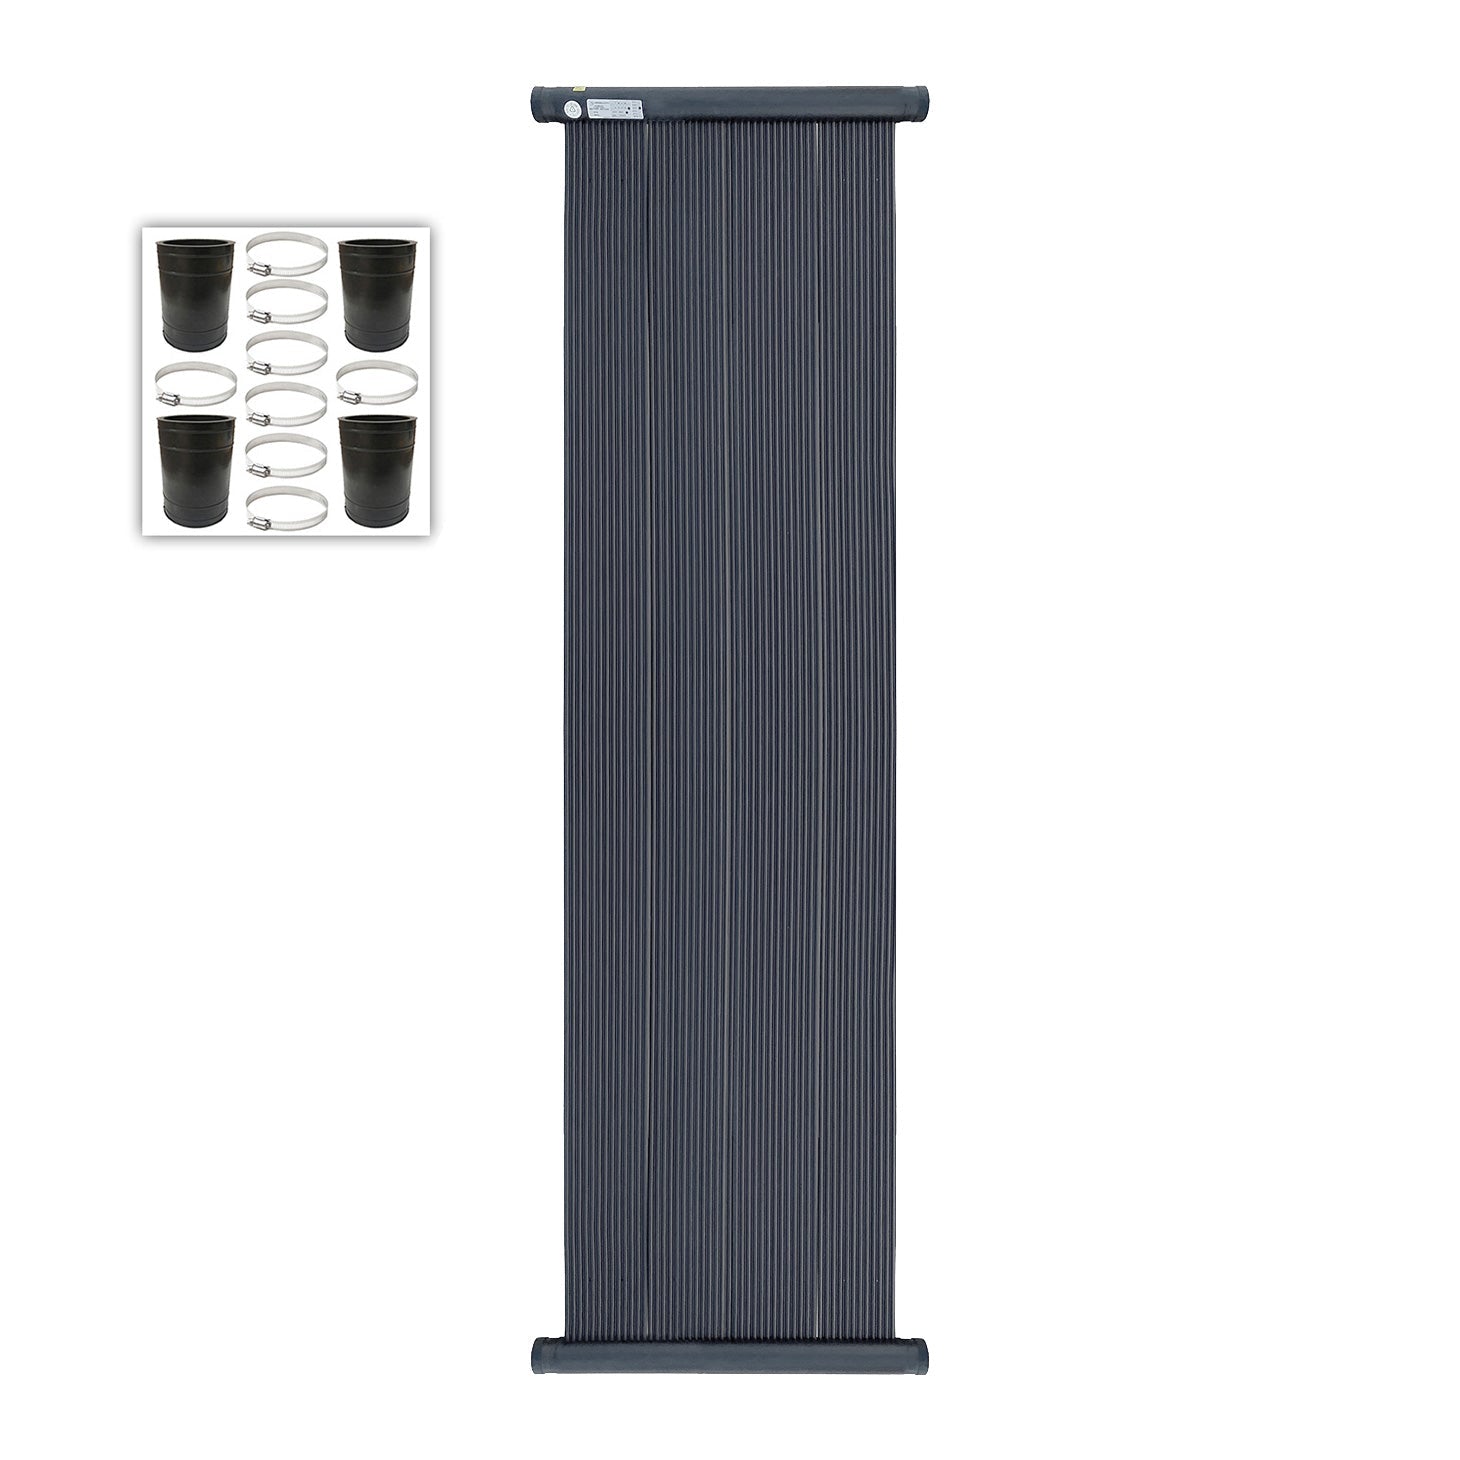 SwimEasy (2ft. Width) Solar Pool Heater Panel Plus Connector Hose Pack - Highest Performing Design